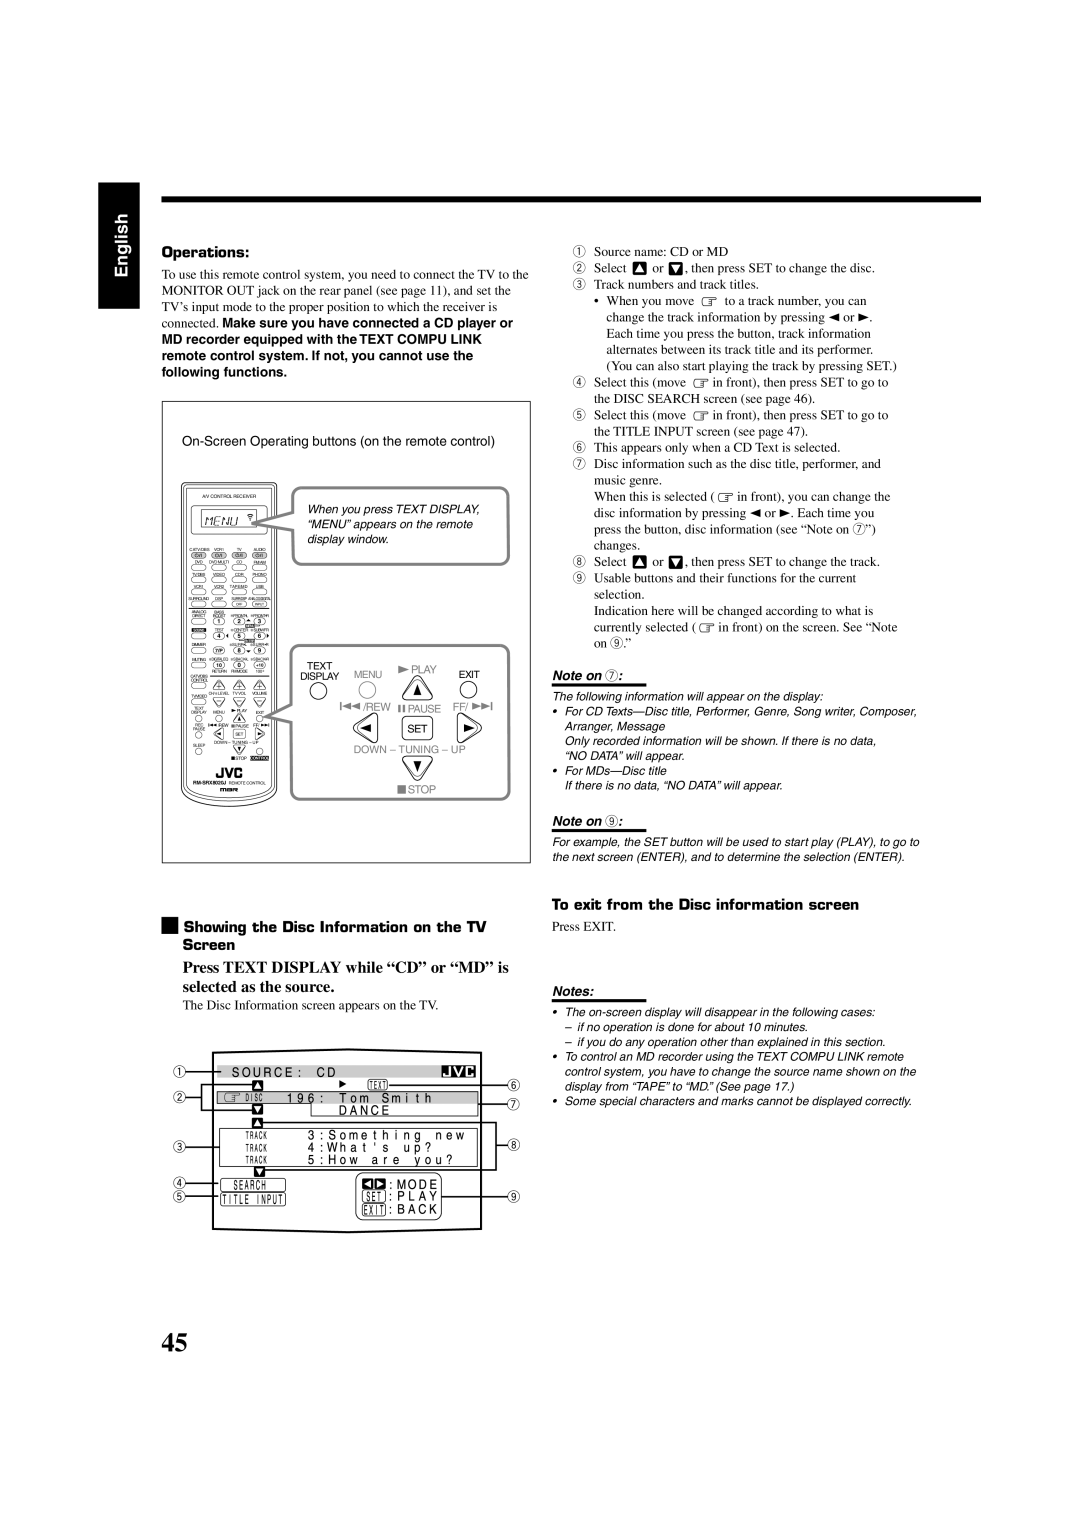 JVC RX-8020VBK manual English, Note on 